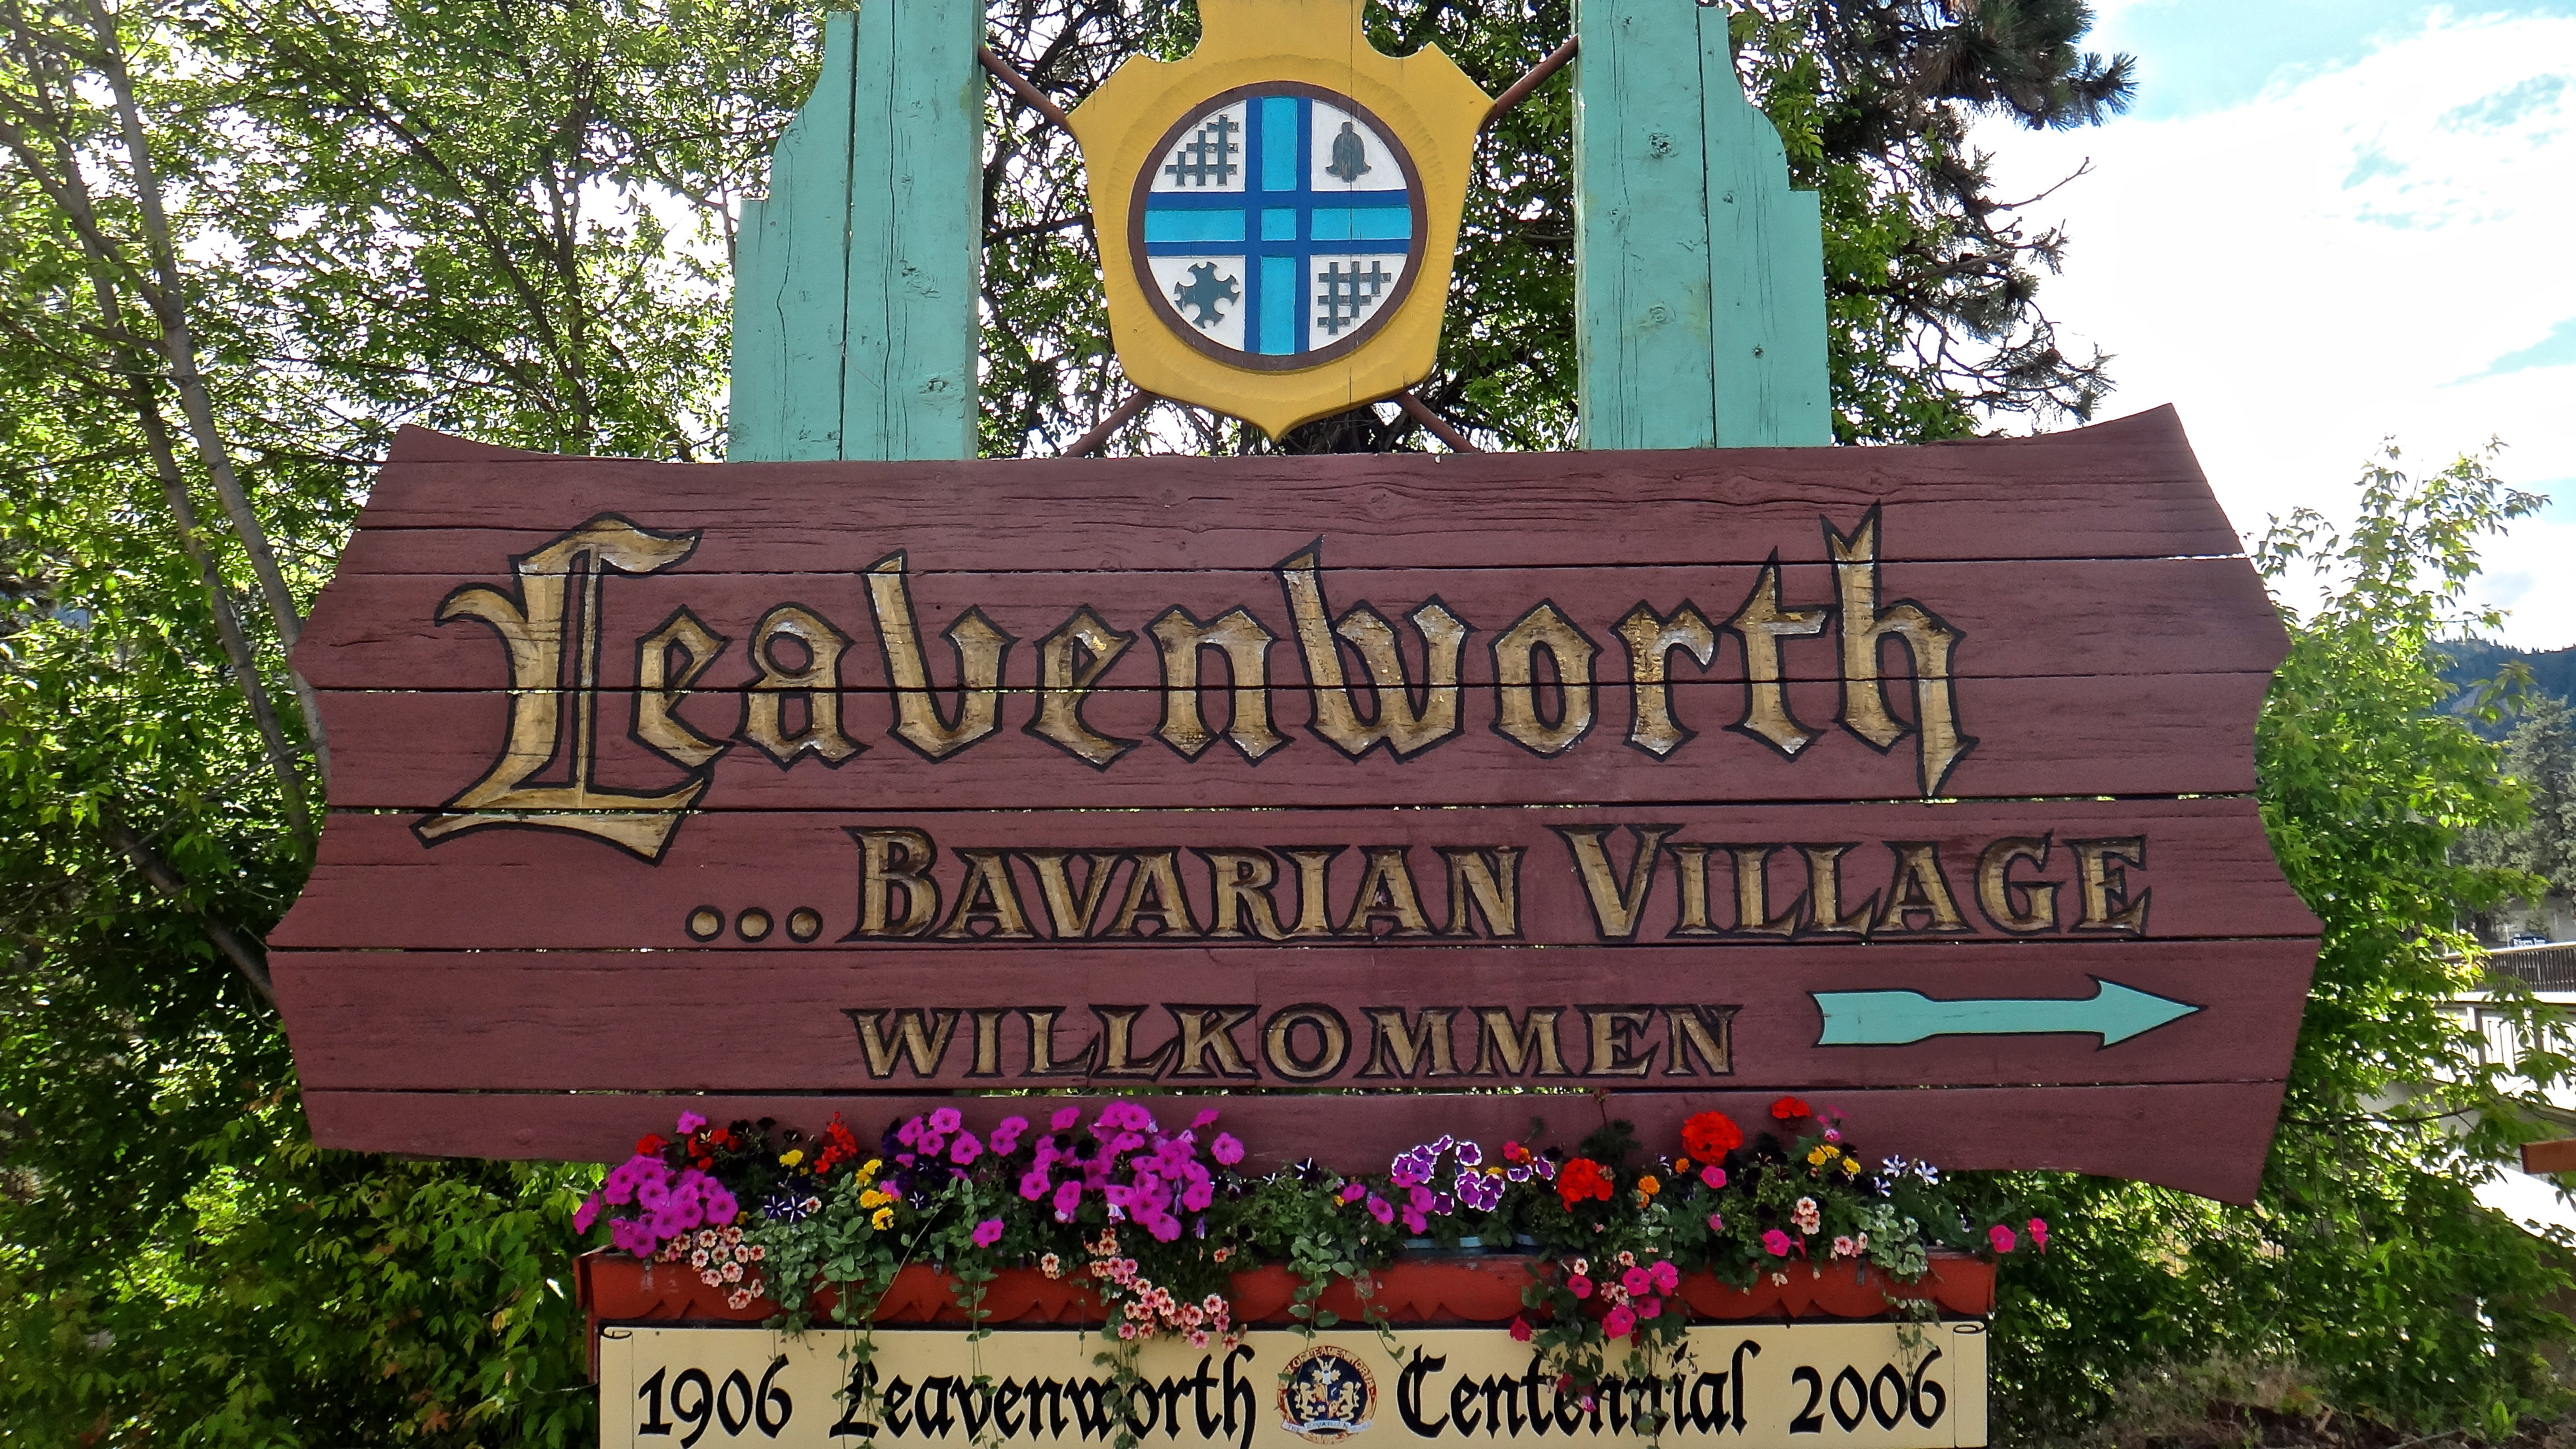 Leavenworth Bavarian Village, Washington